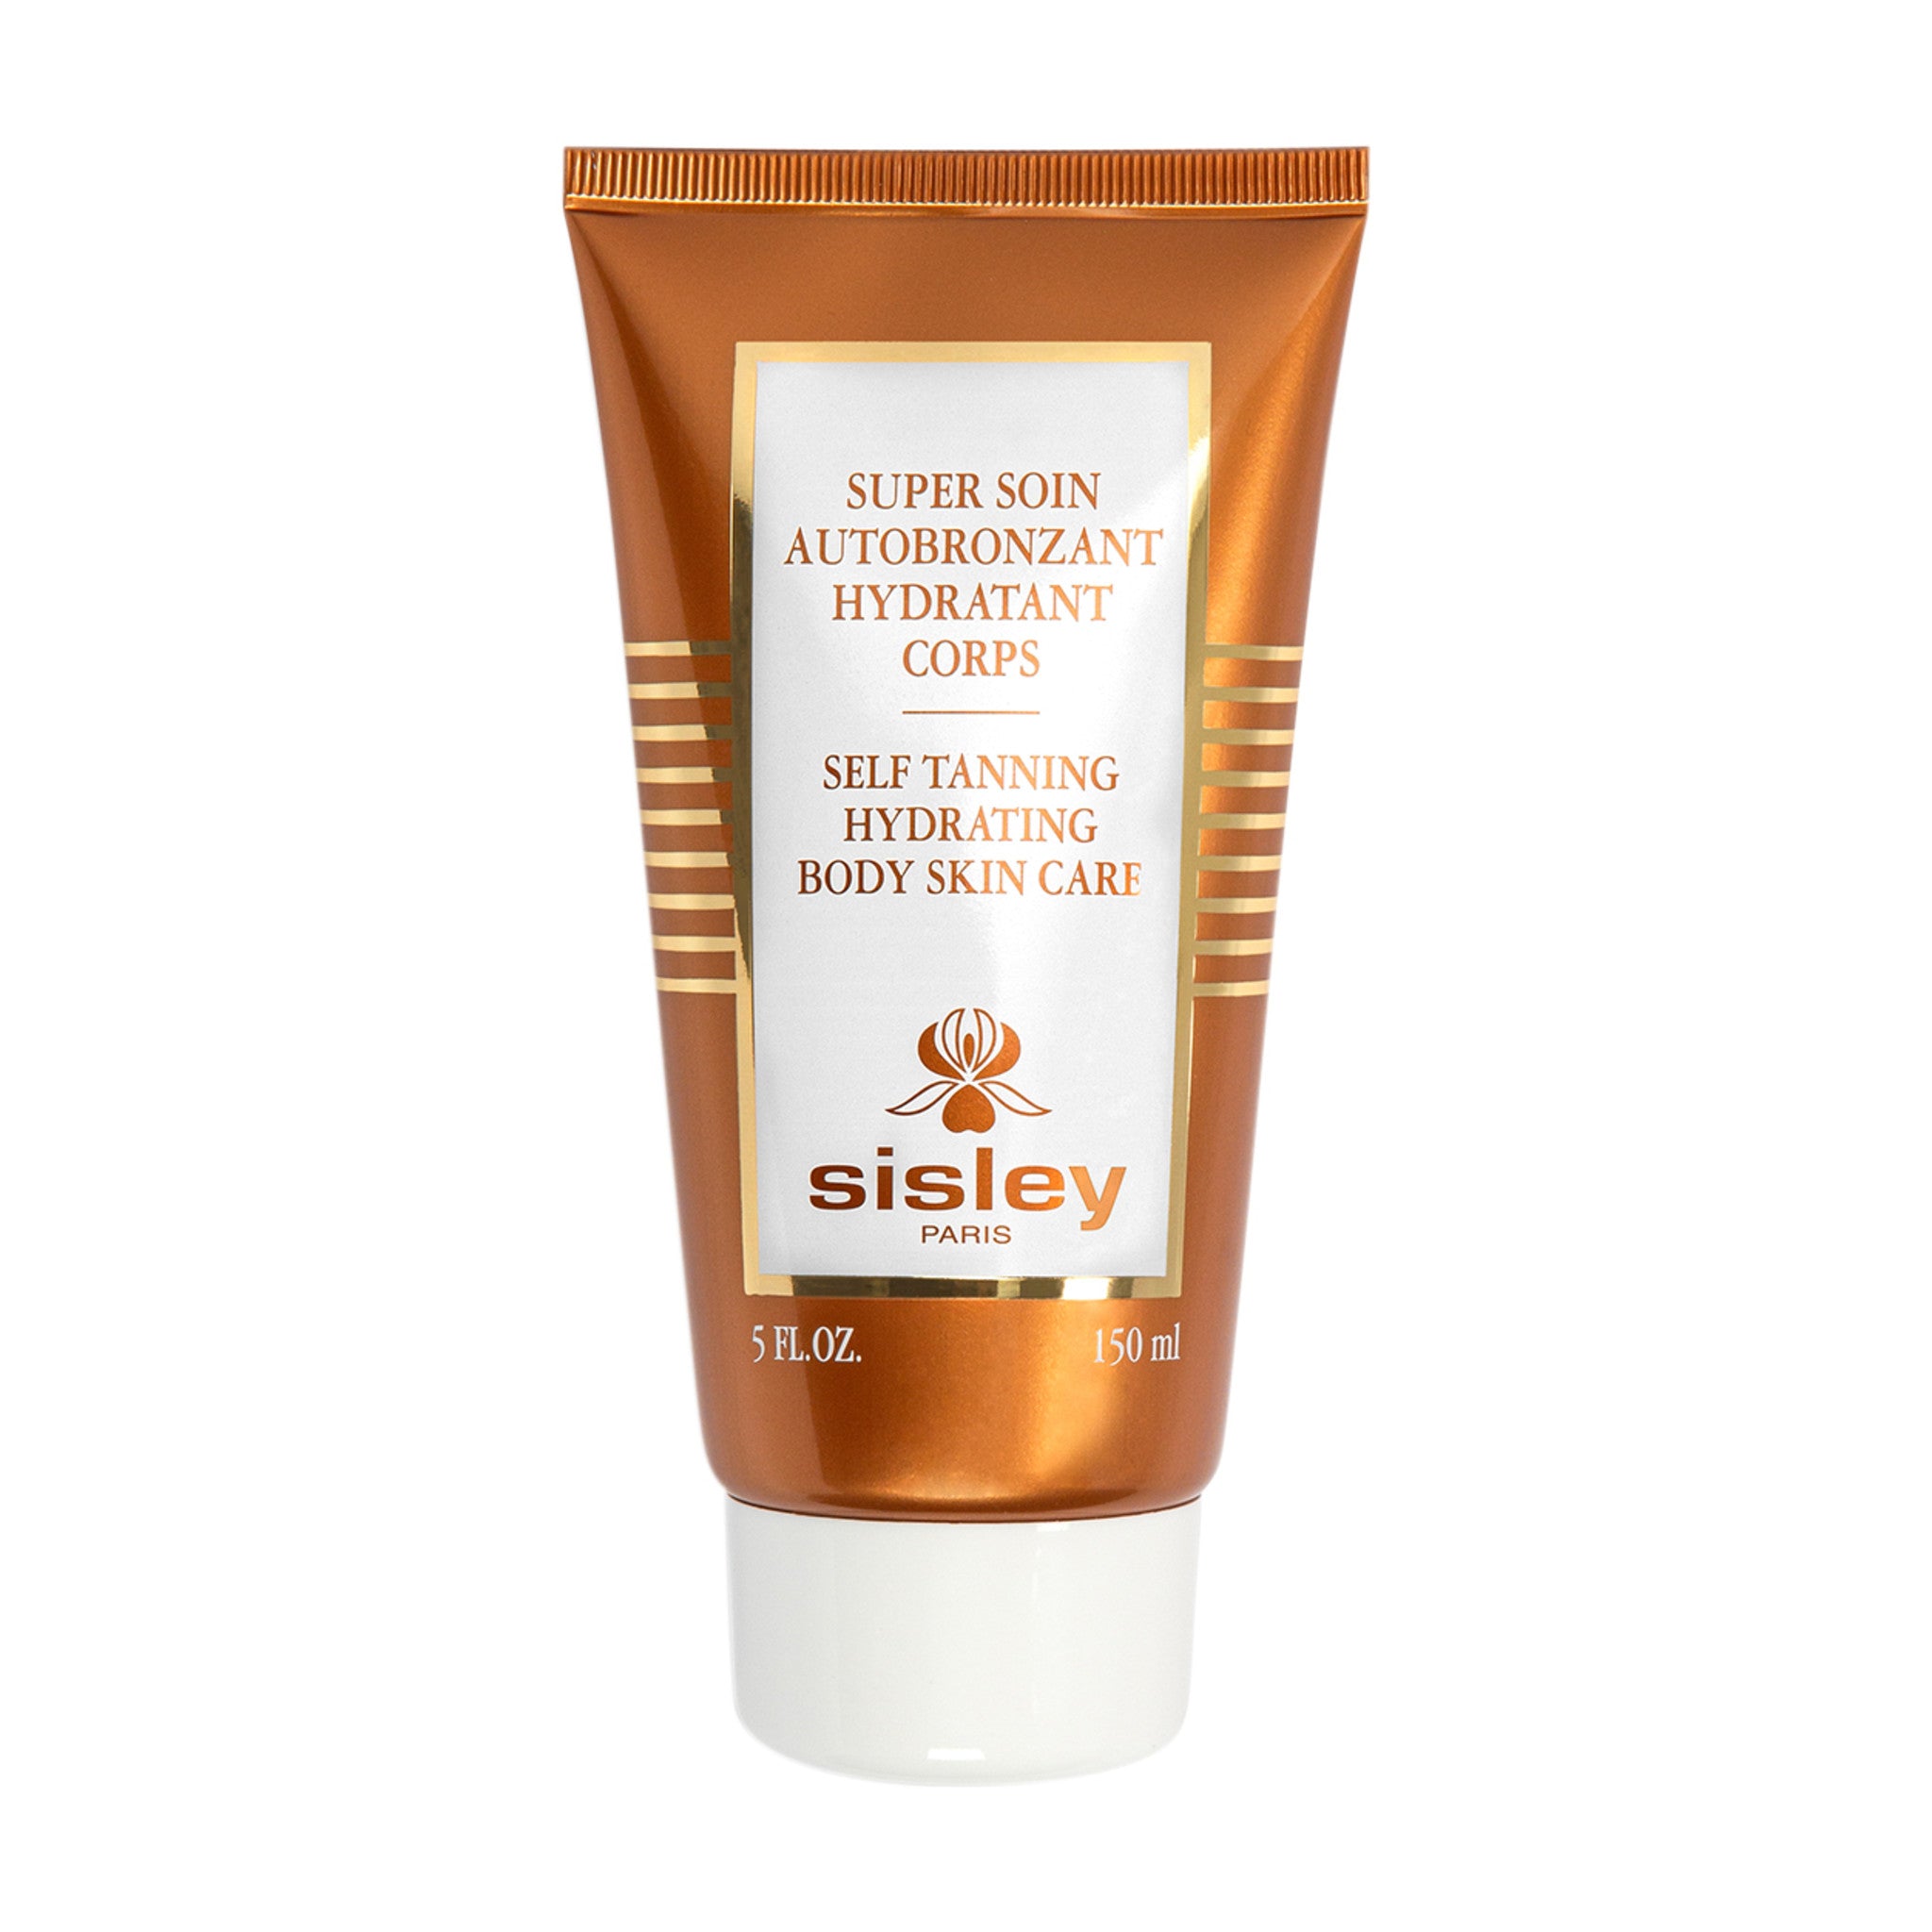 Sisley-Paris Self Tanning Hydrating Body Skin Care main image.